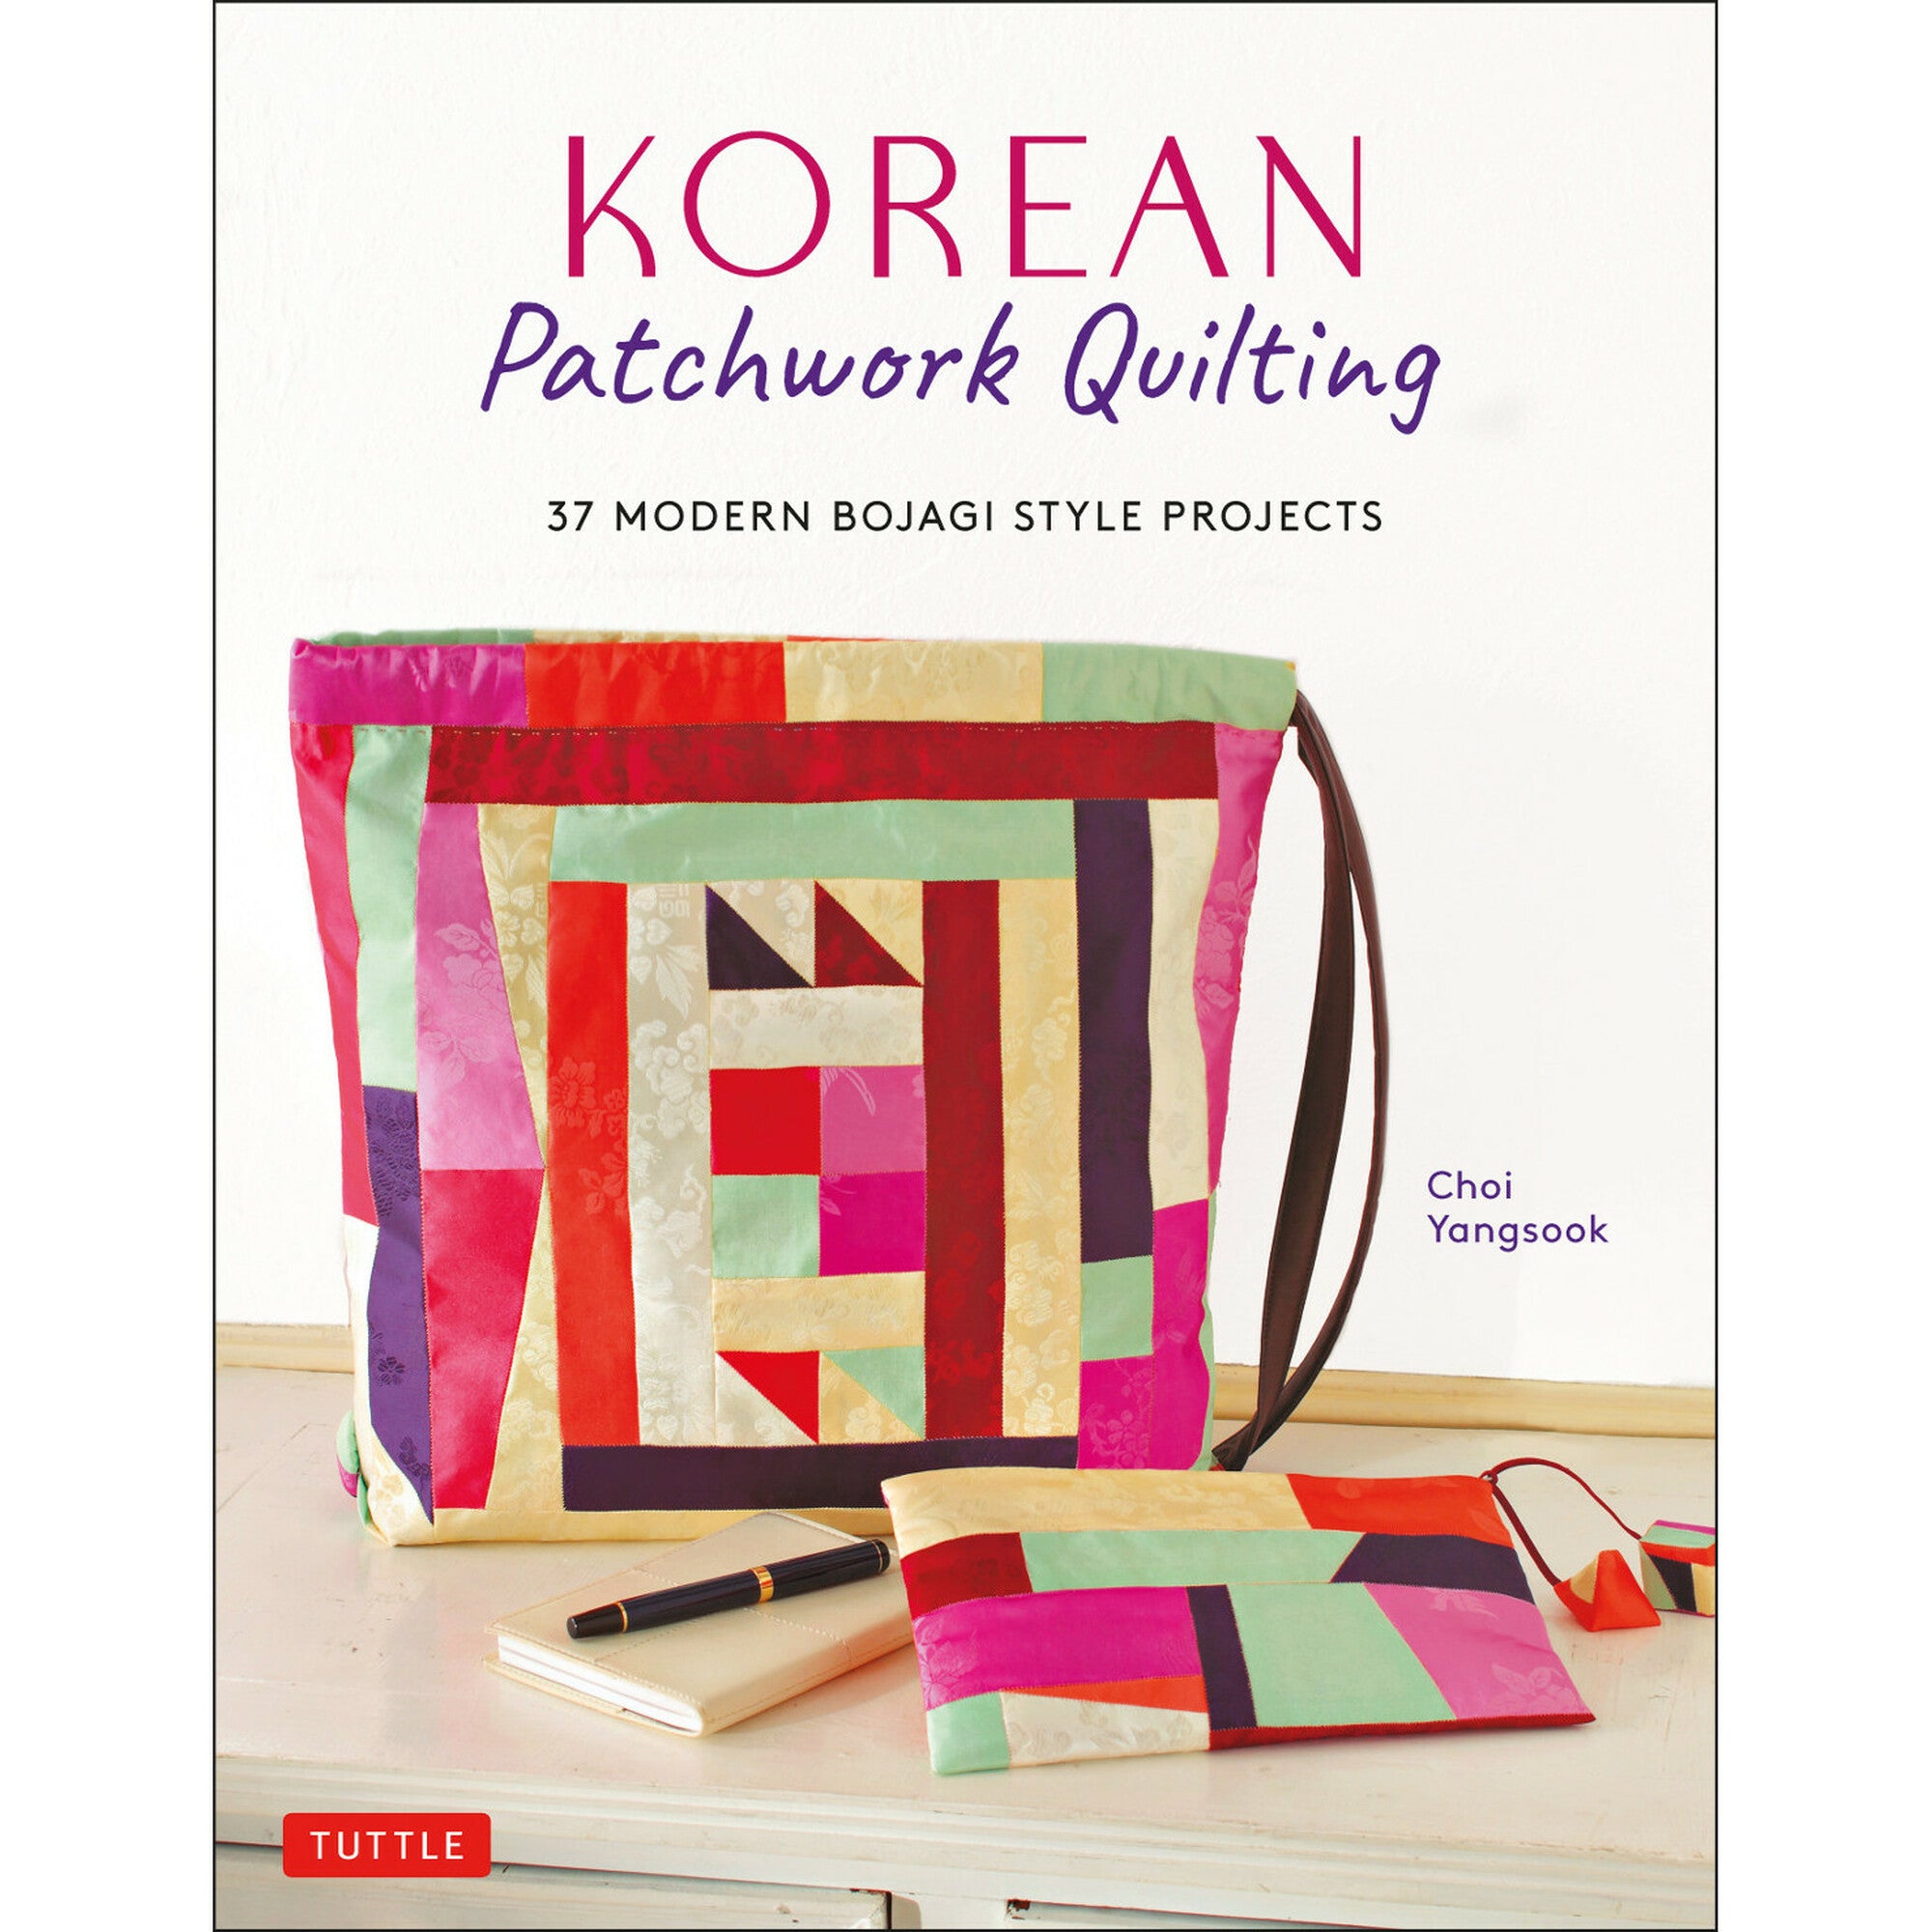 Korean Patchwork Quilting